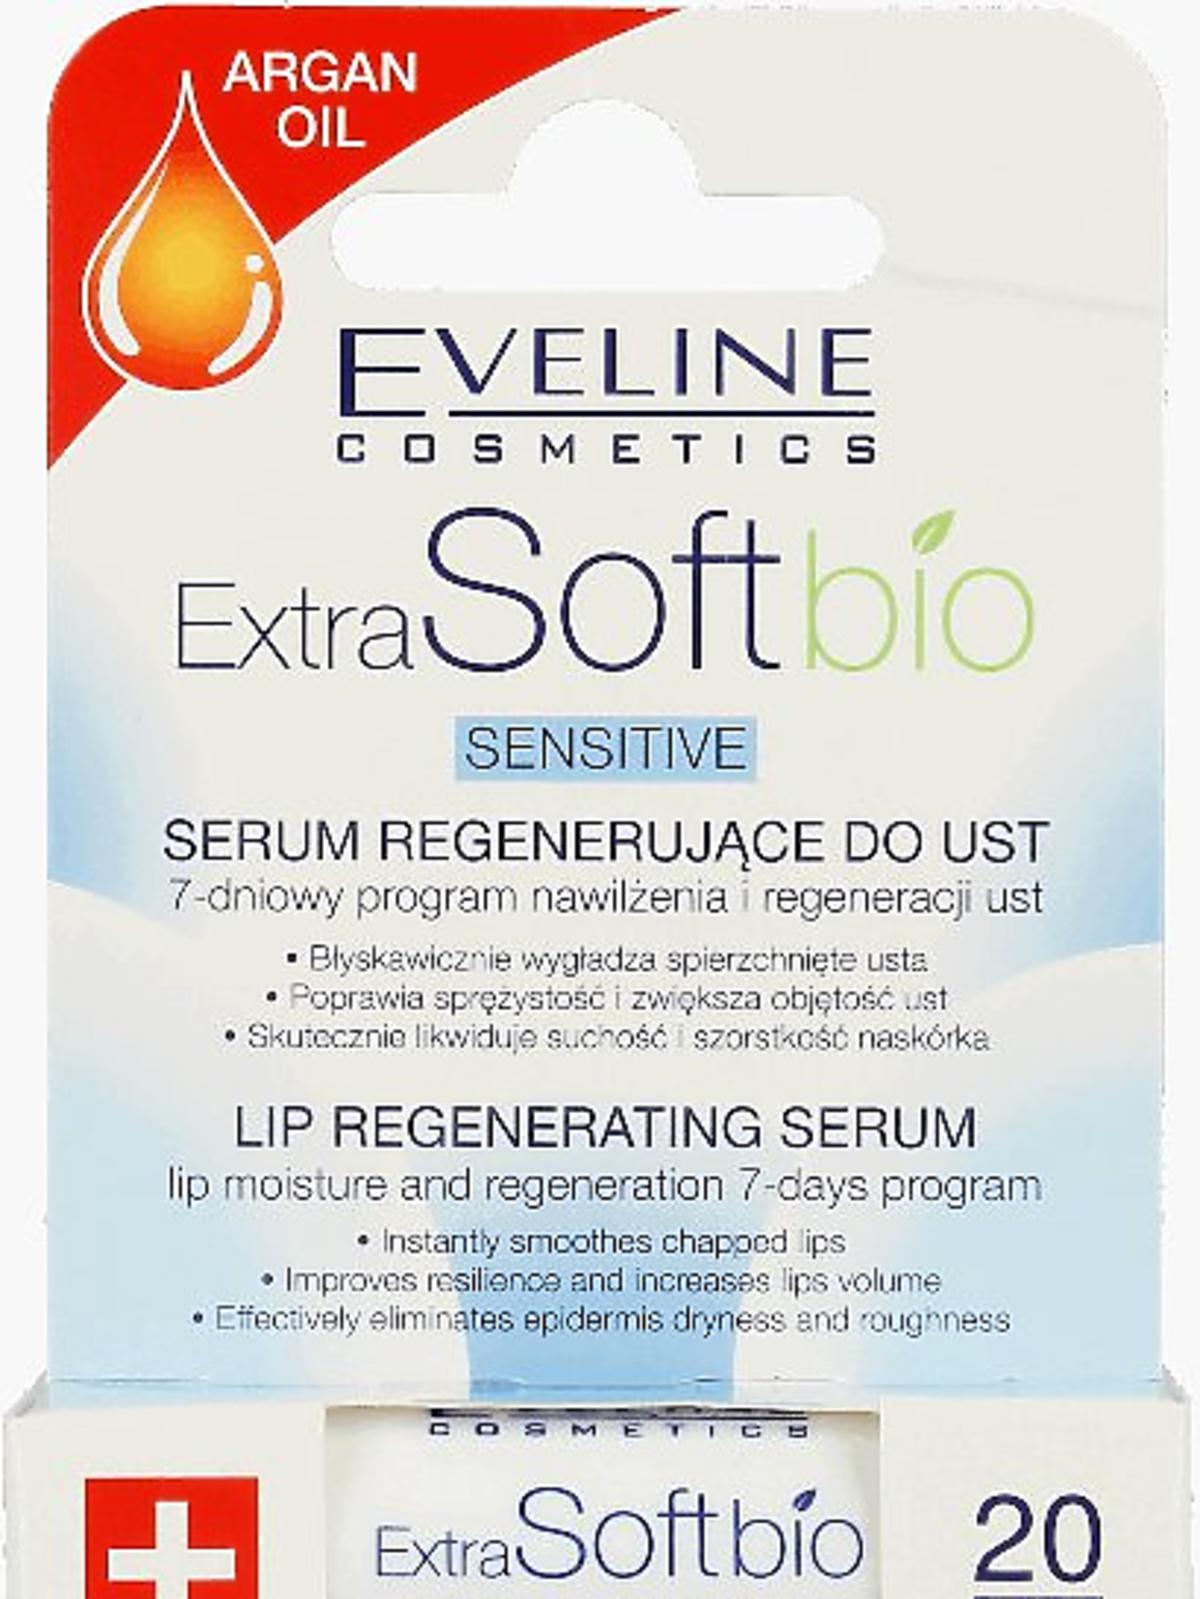 Serum regenerujące do ust Sensitive Extra Soft Bio Eveline, 5,99zł